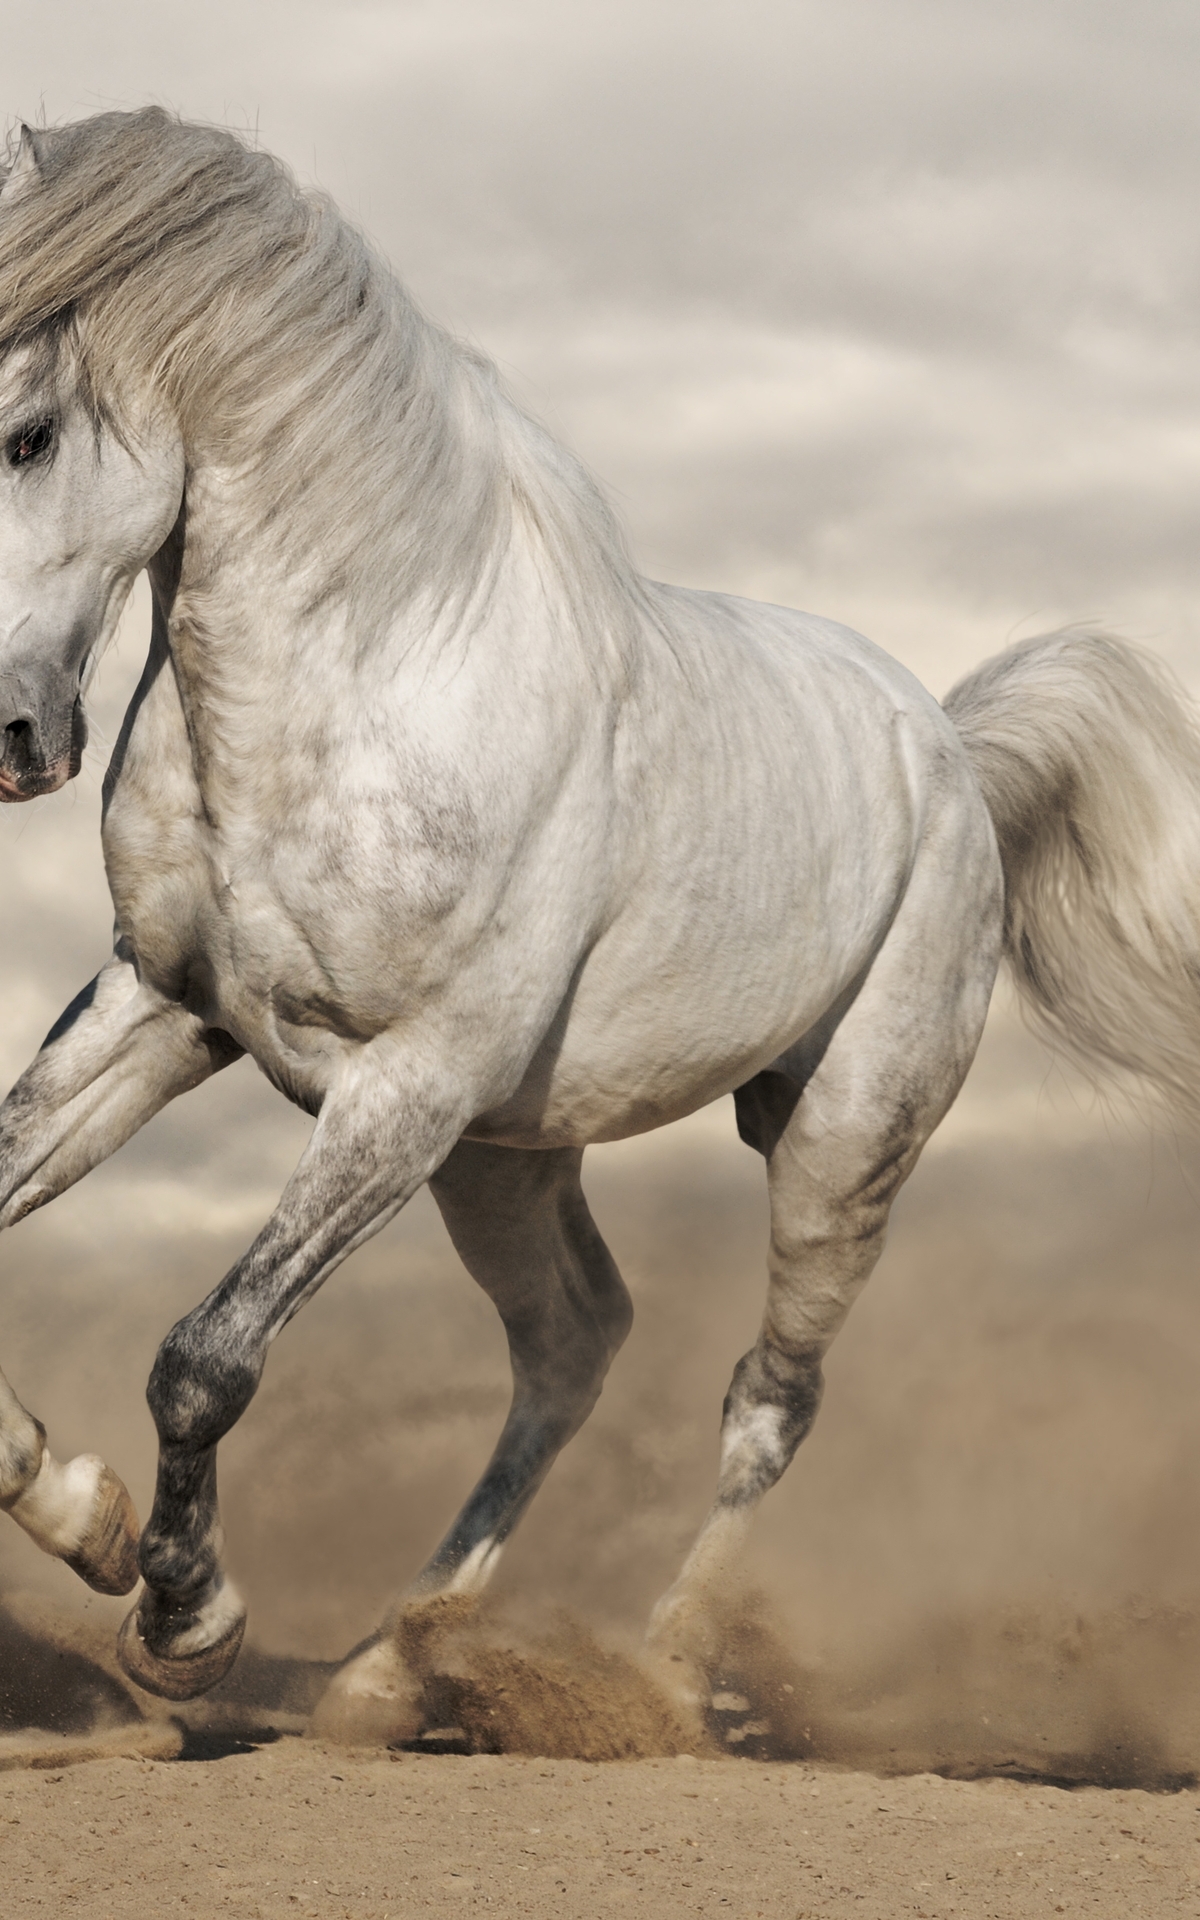 Image: Horse, white, grace, sand, dust, gallop, maneuver, clouds